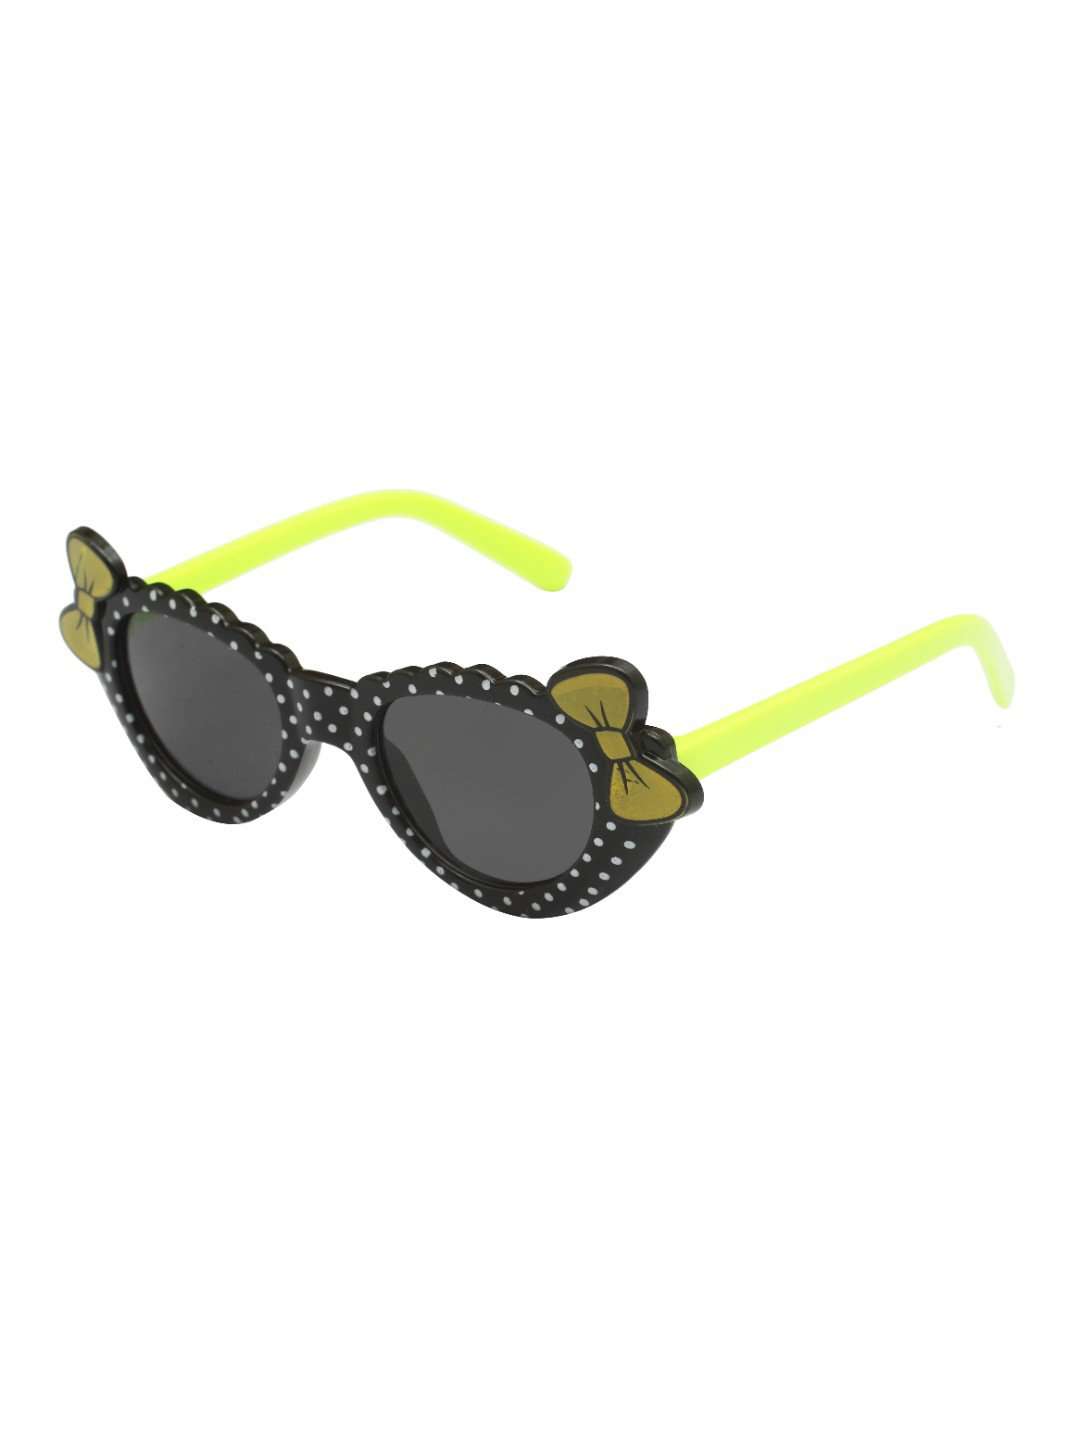 Stol'n Kids Black and Green Bow Cat Eye Sunglasses - SWHF